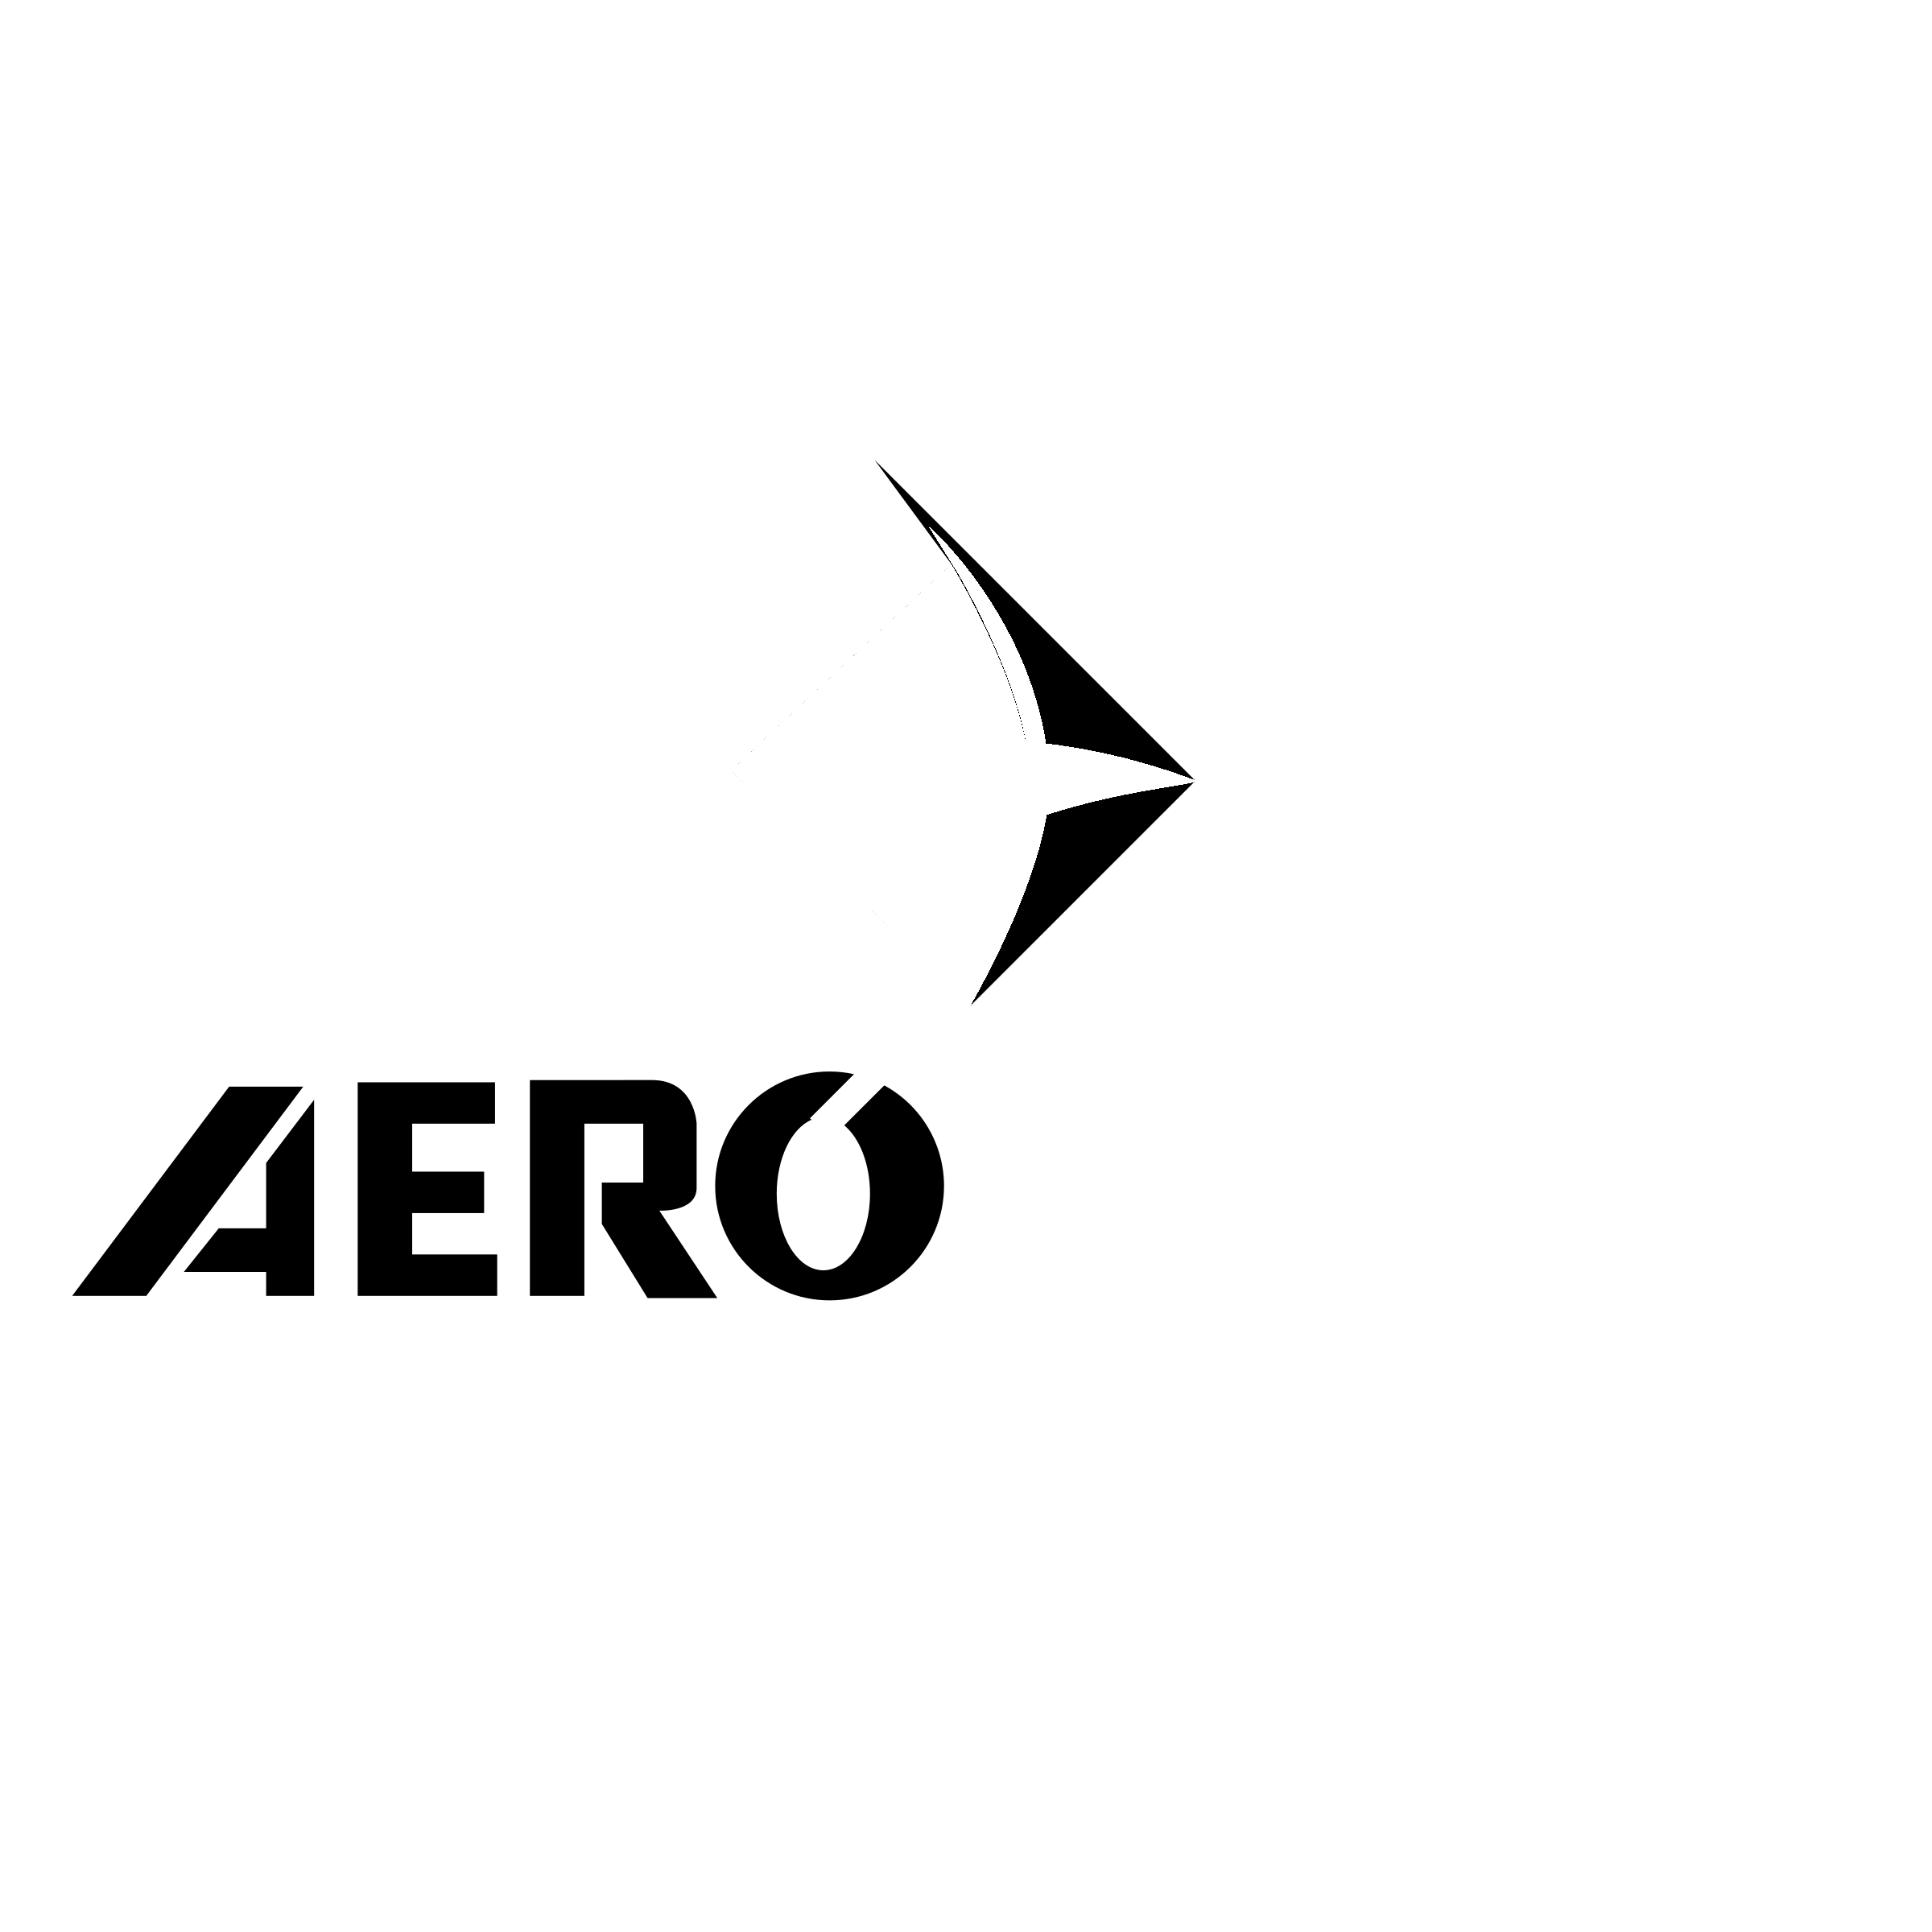 Aero Logo - Aero Lloyd Logo PNG Transparent & SVG Vector - Freebie Supply